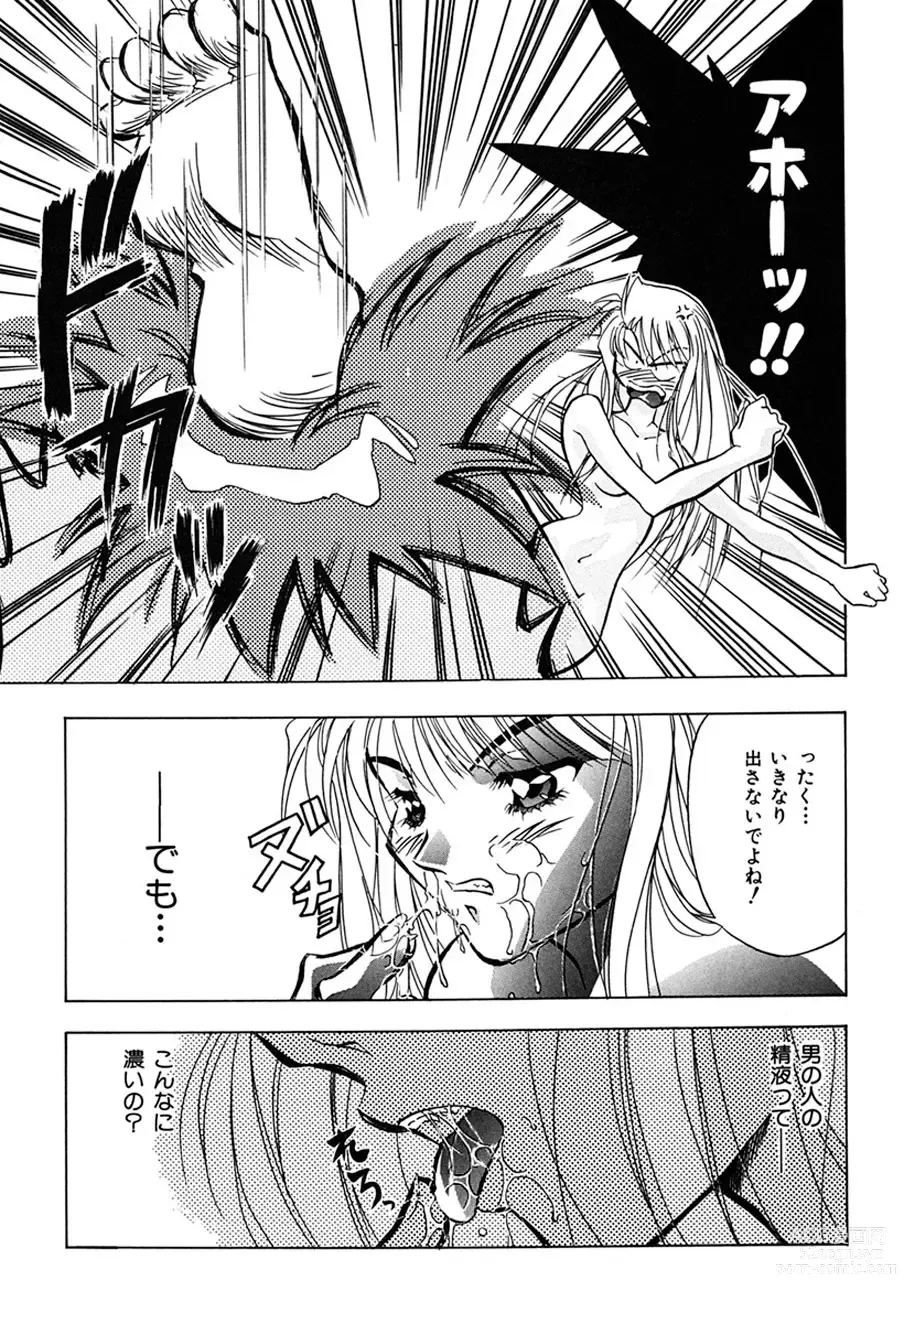 Page 156 of manga Haitoku no Ai